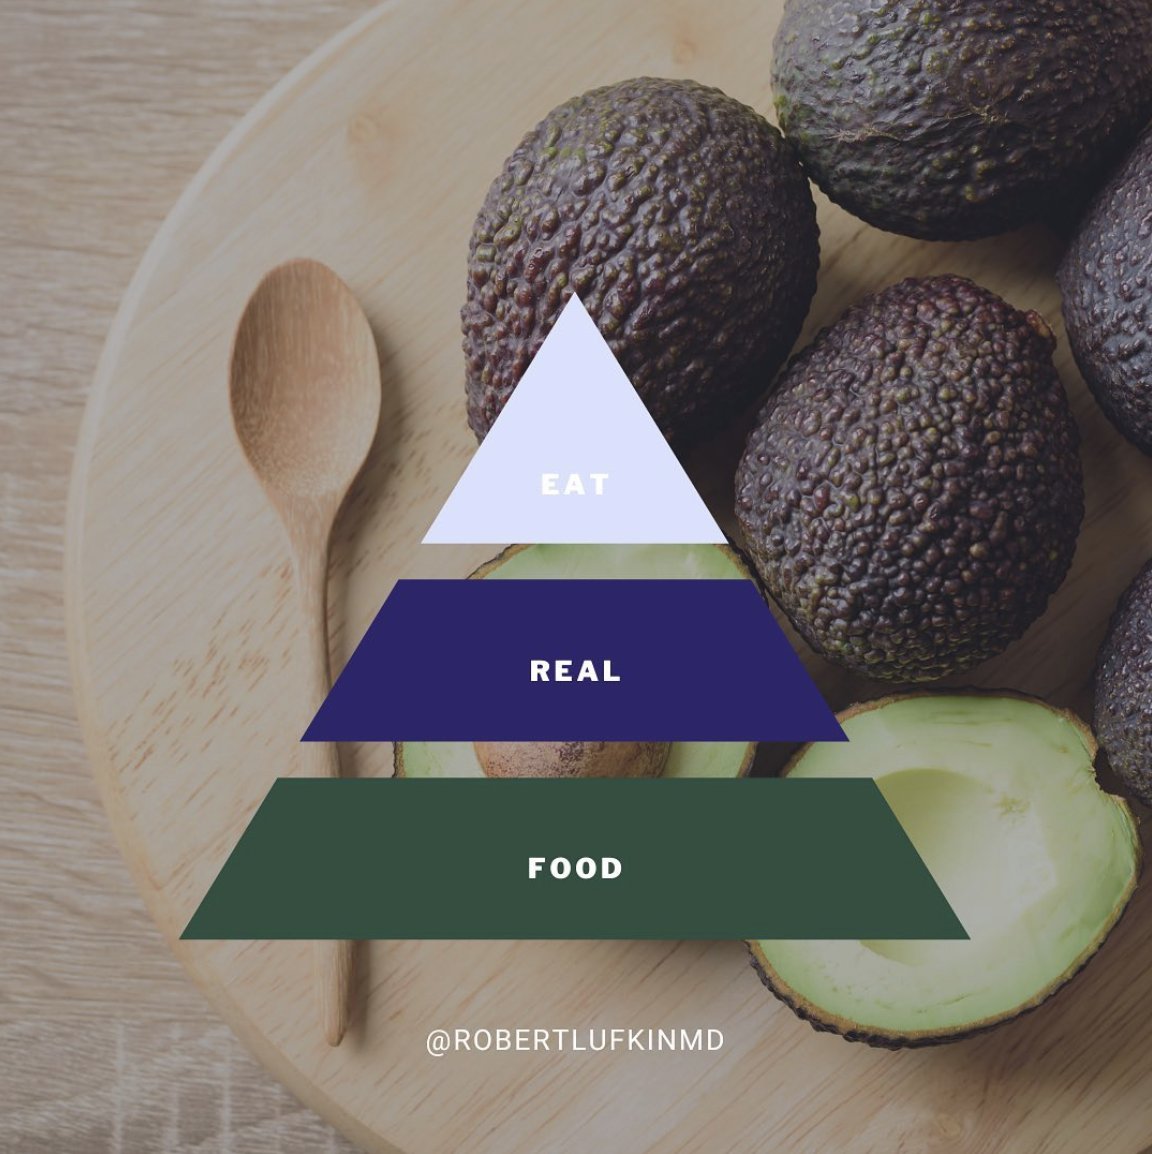 My food pyramid.